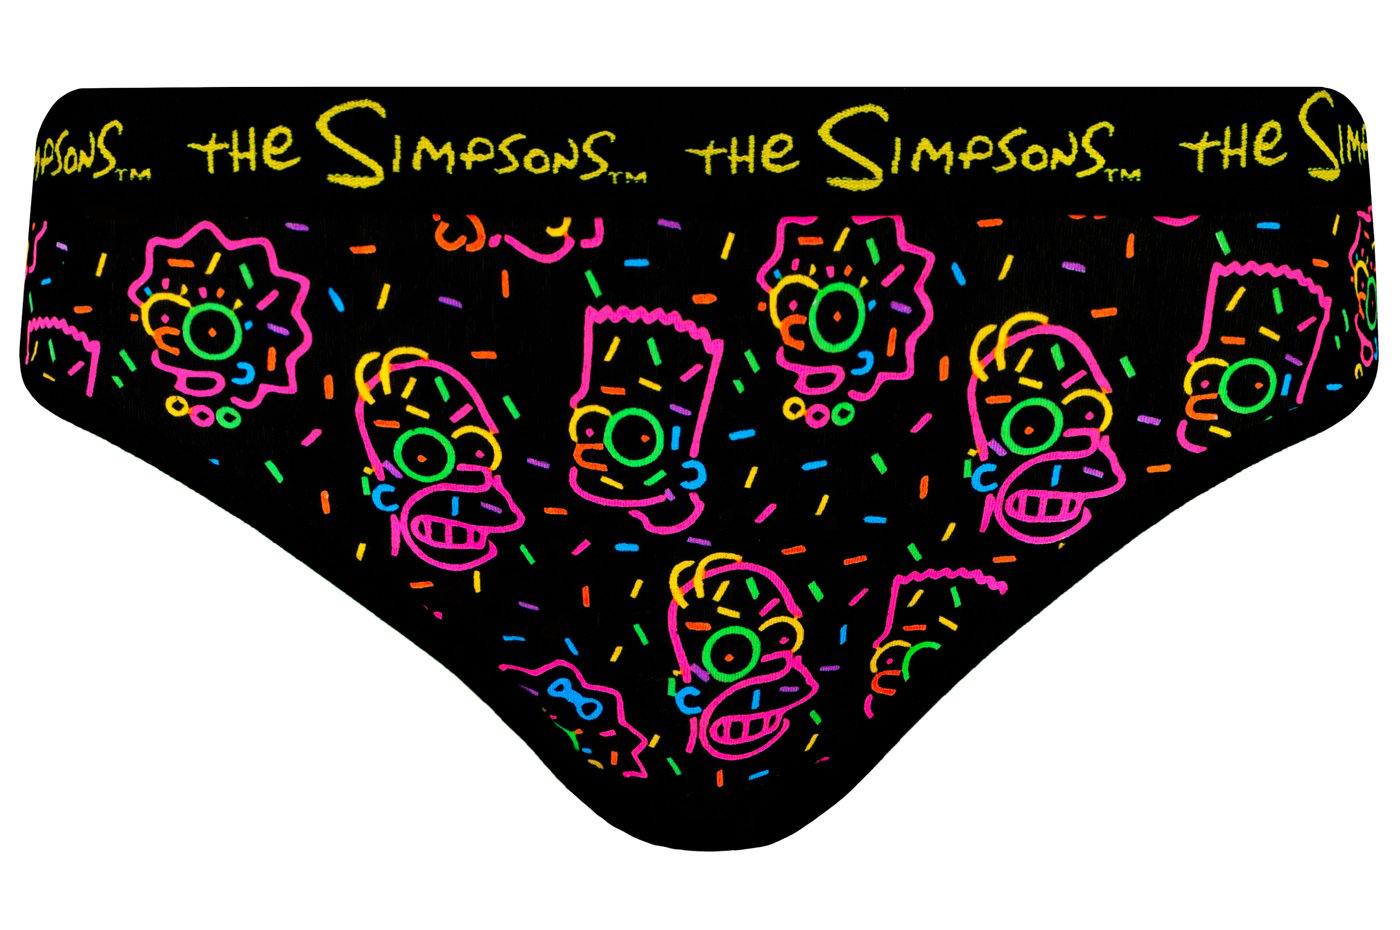 Dámské kalhotky  Simpson's